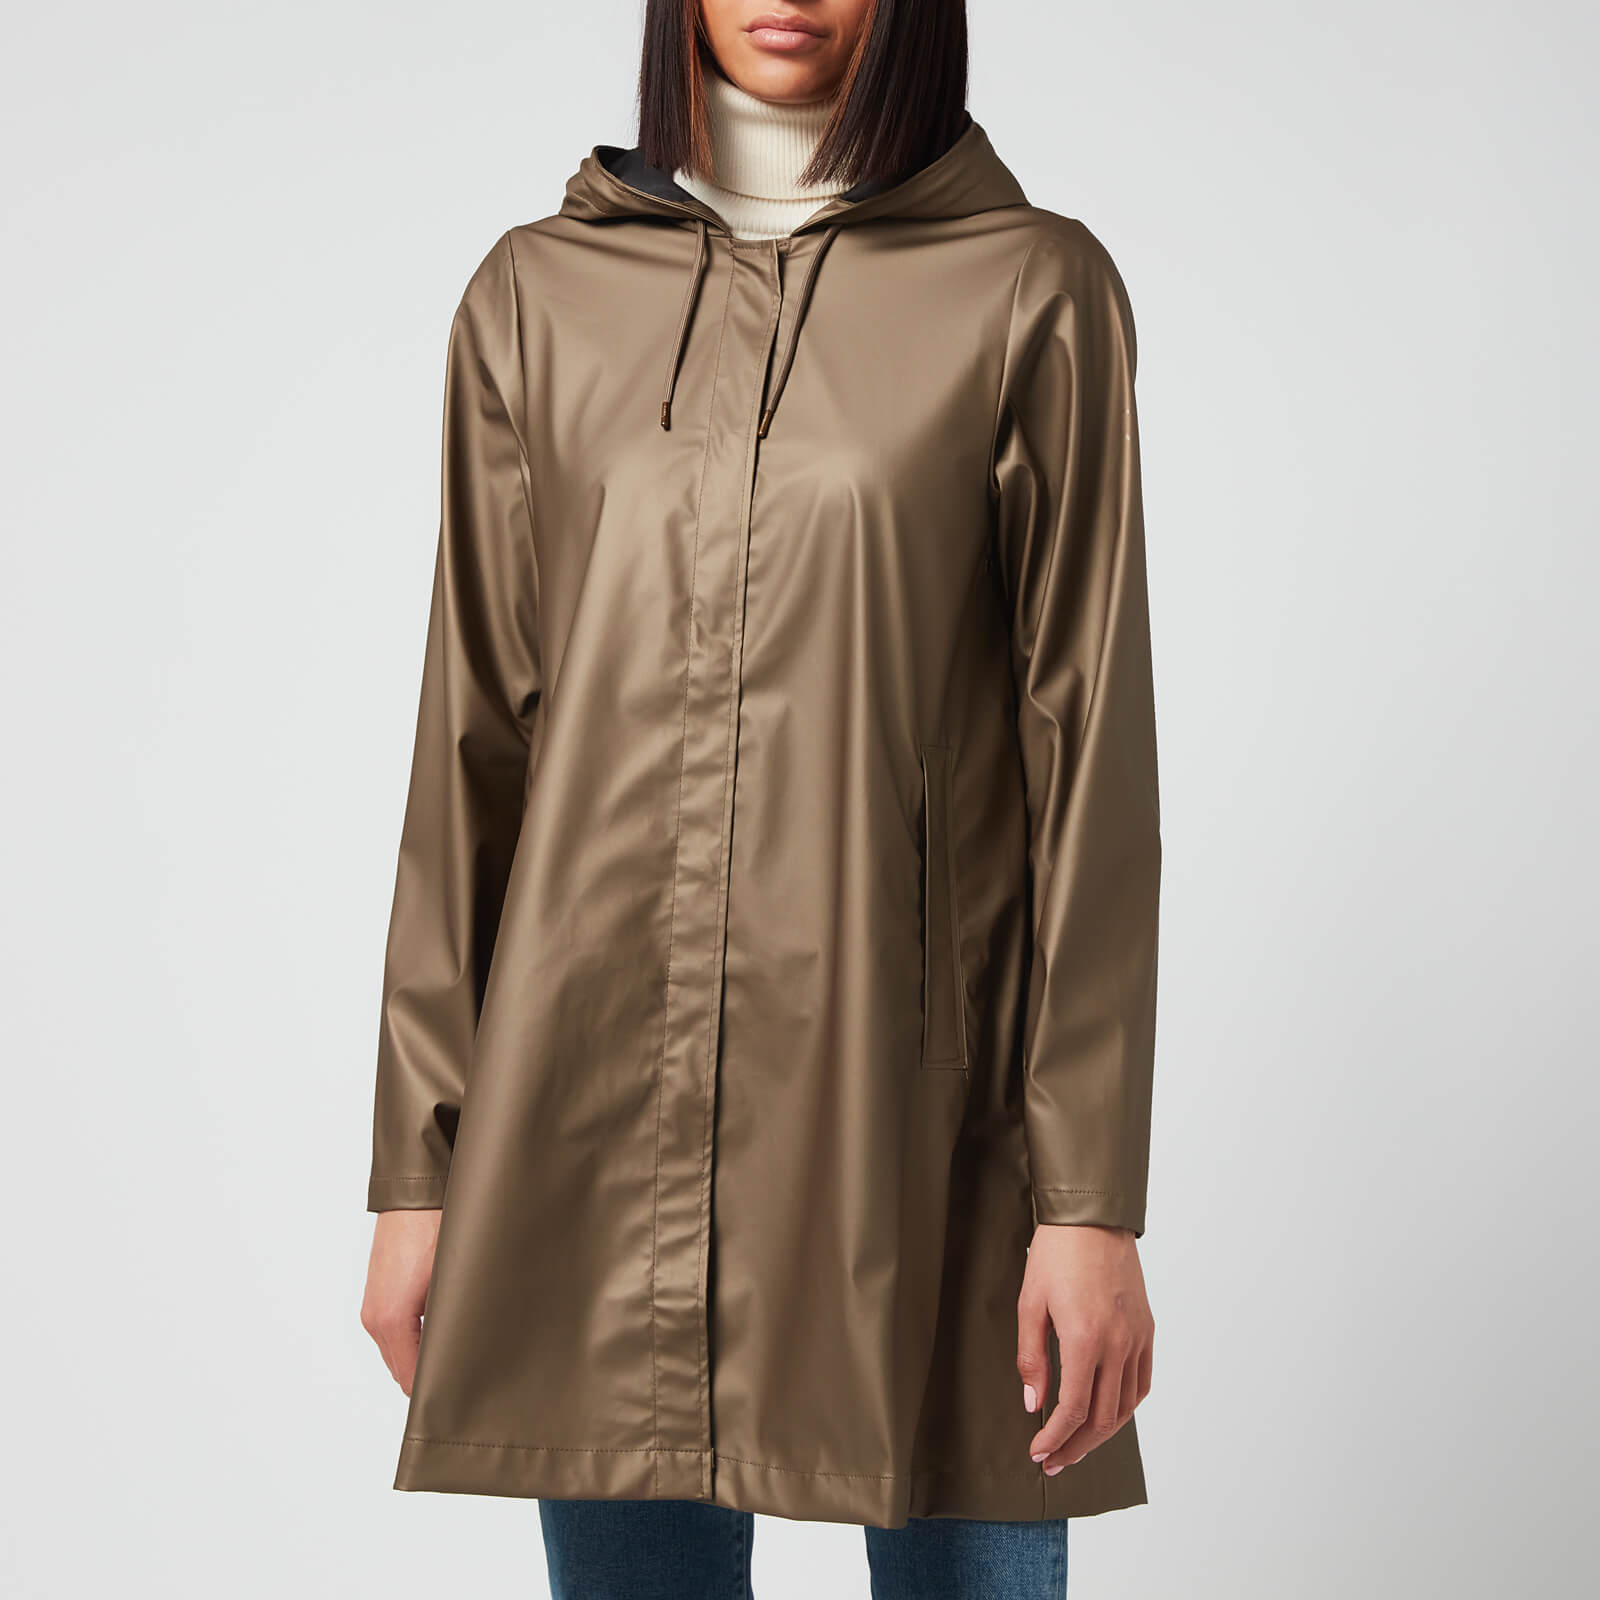 Rains Women's A-Line Jacket - Metallic Mist - XS